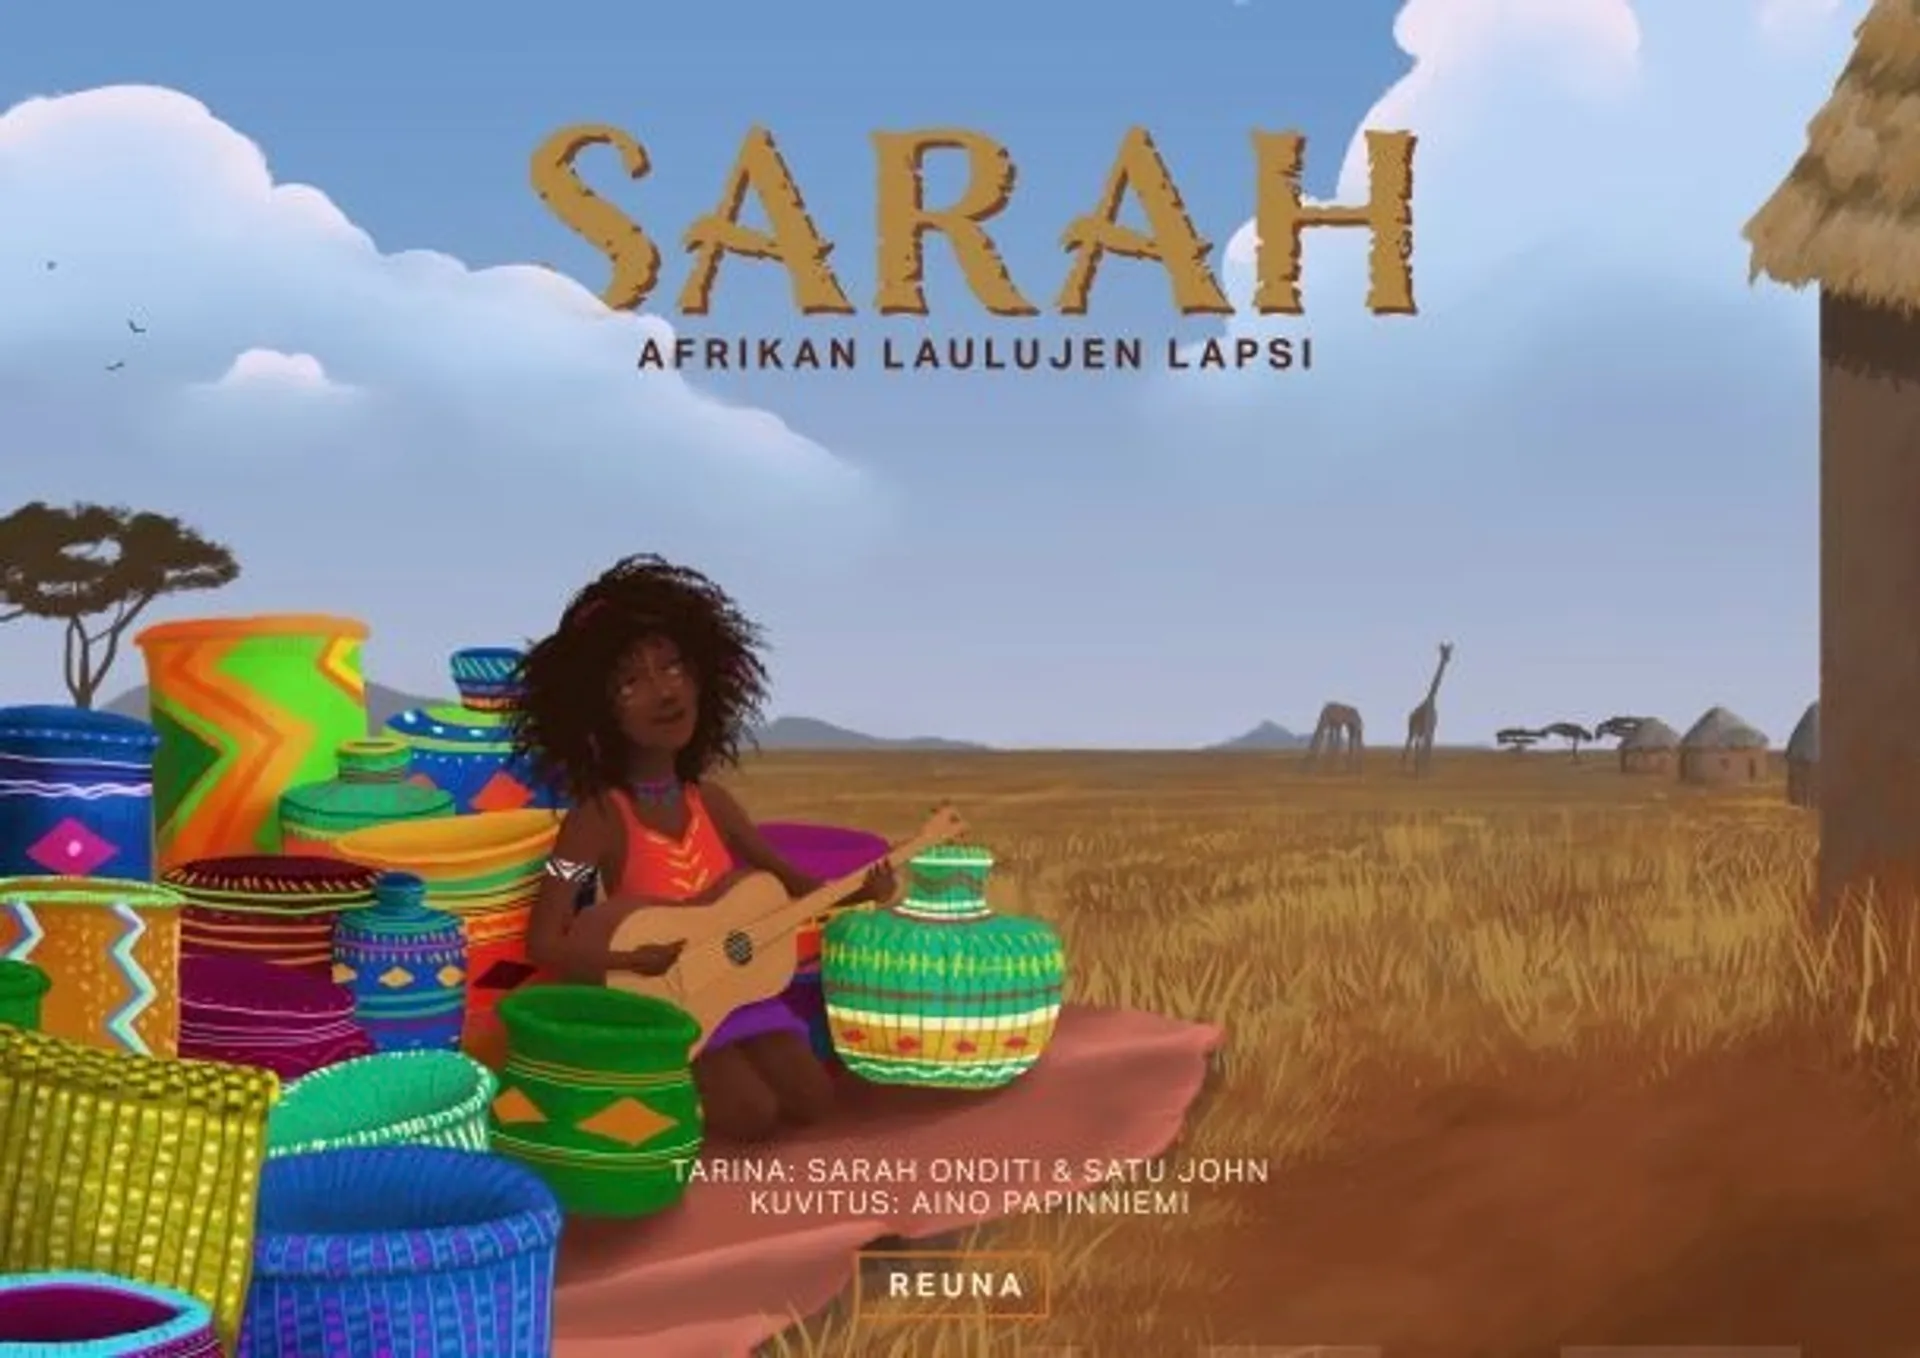 Onditi, Sarah, Afrikan laulujen lapsi